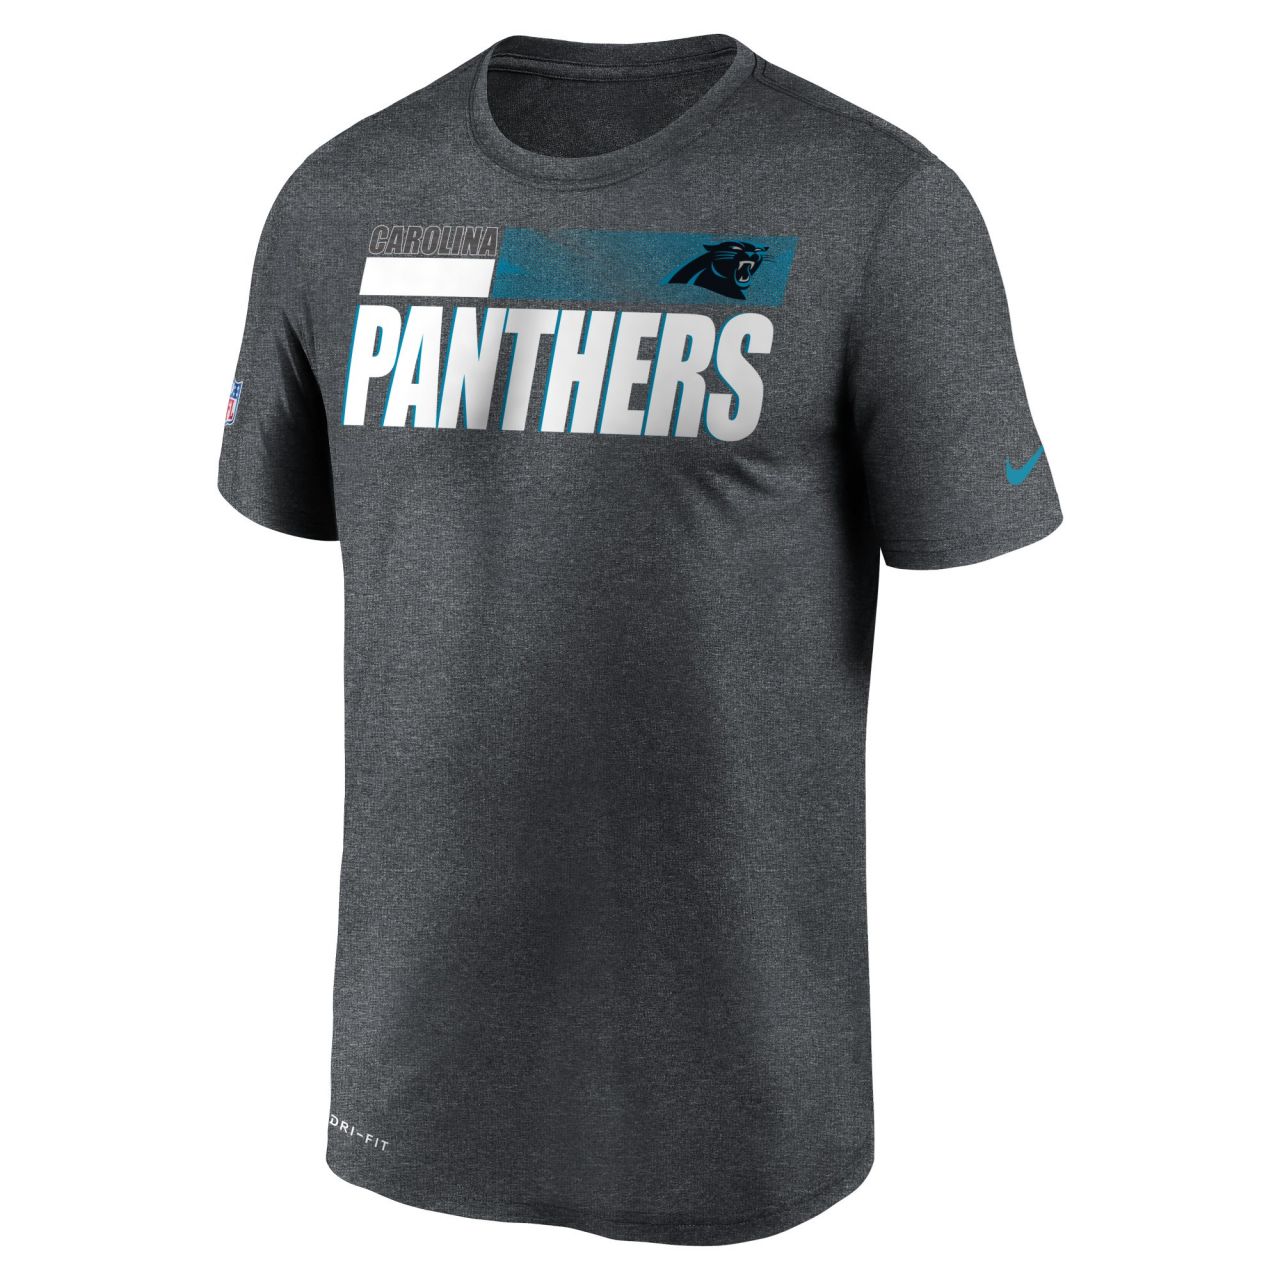 amfoo - Nike Dri-FIT Legend Shirt - SIDELINE Carolina Panthers